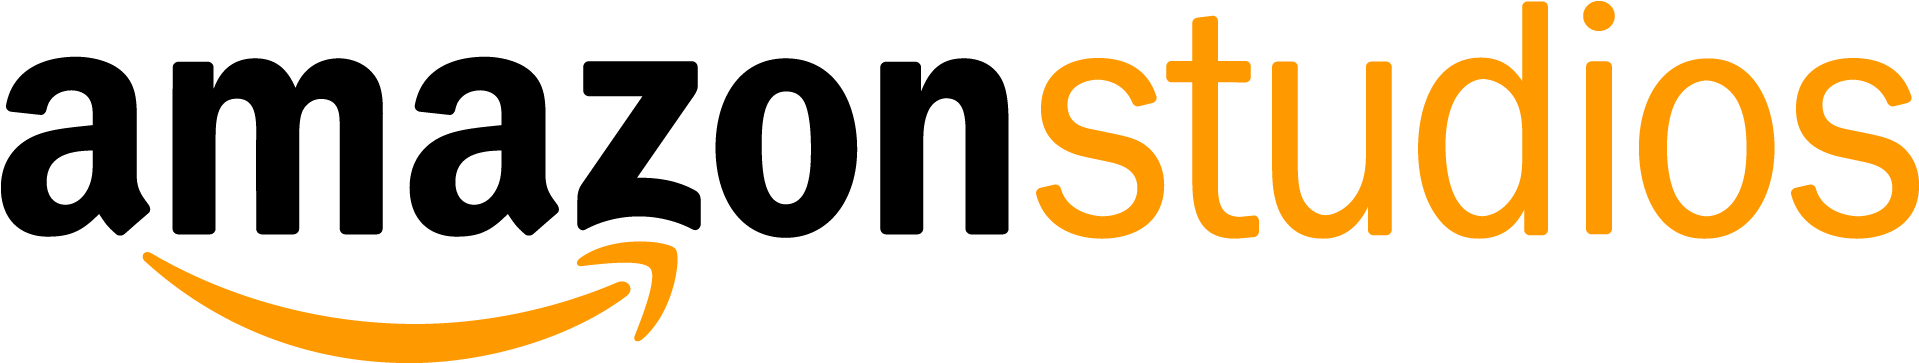 Gold Sponsors - Amazon Studios Logo Transparent (1920x371)